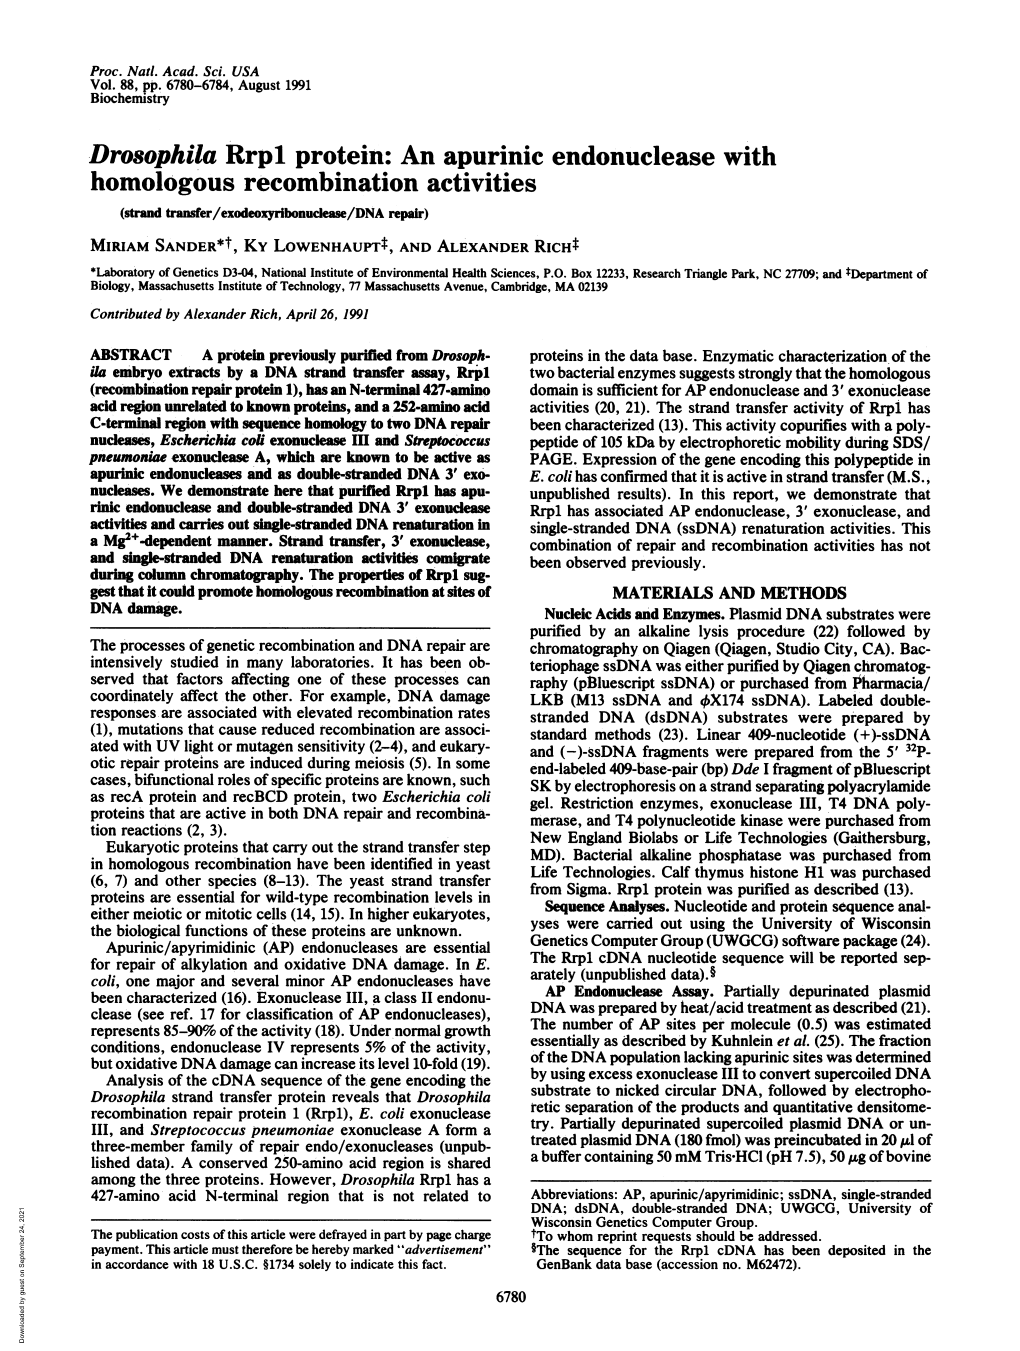 Drosophila Rrpl Protein: an Apurinic Endonuclease with Homologous